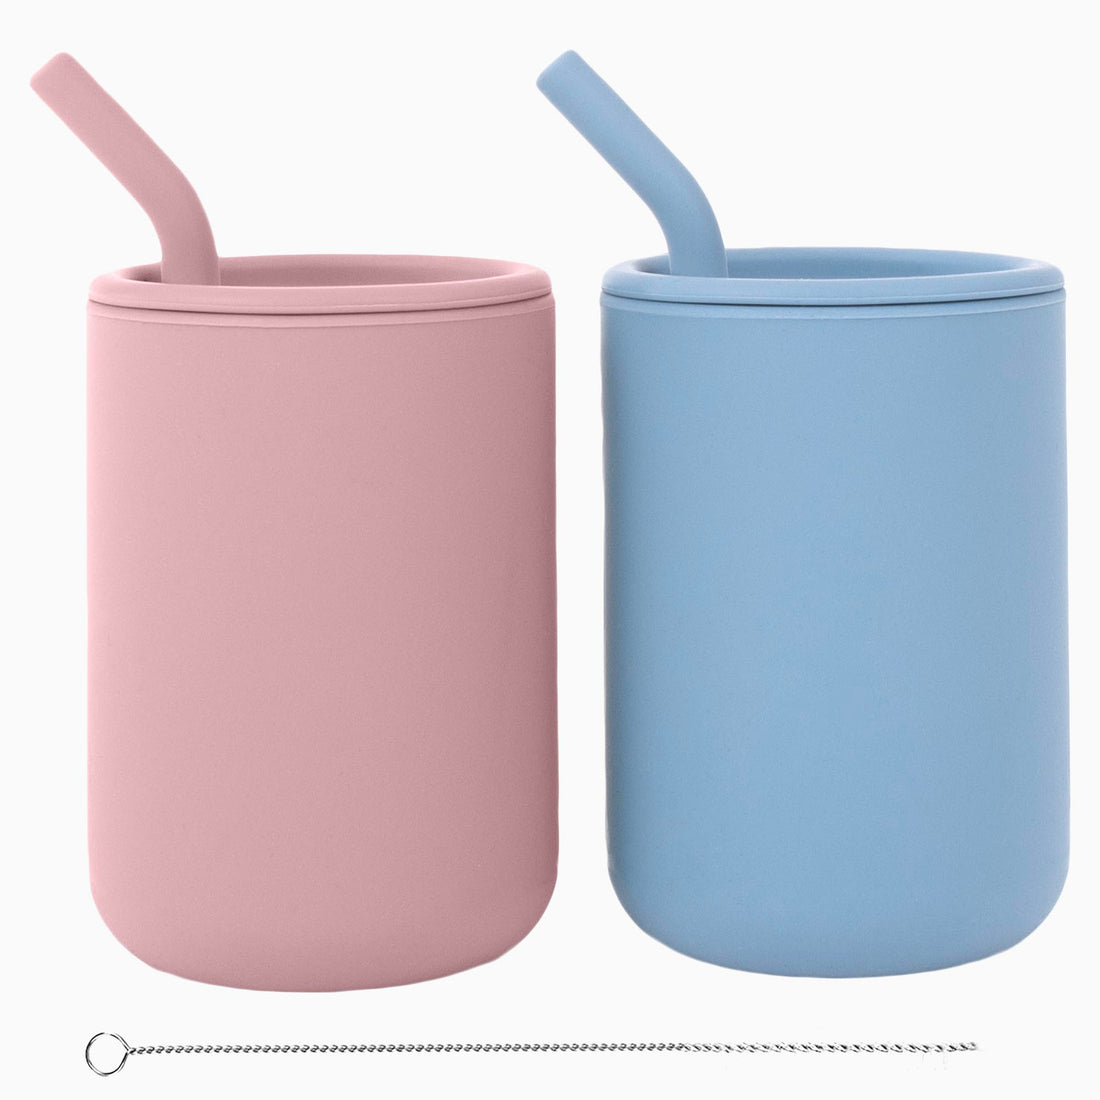 Wholesale Sippy Cups - Handles, Flip Straw, 8 oz